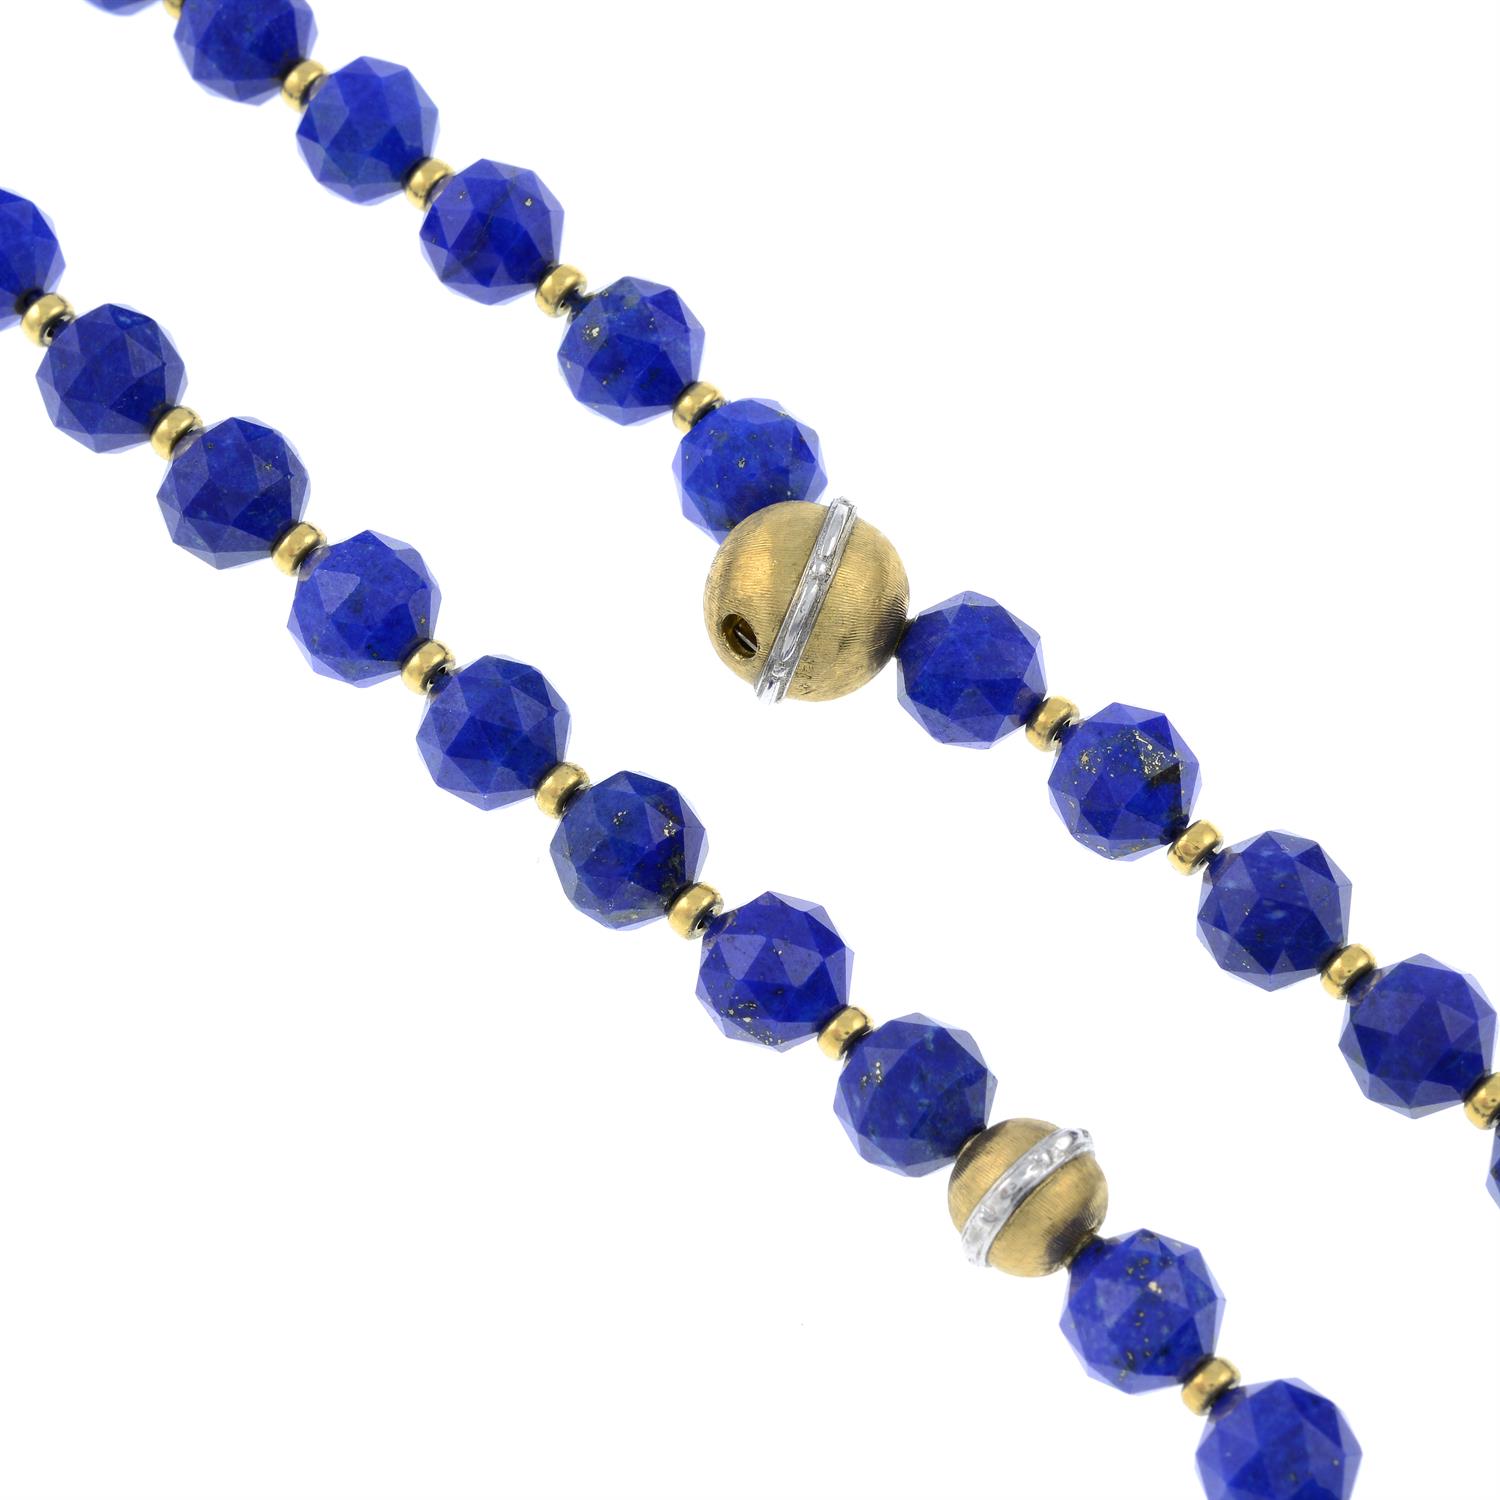 A lapis lazuli faceted bead, interchangeable necklace and bracelet set.